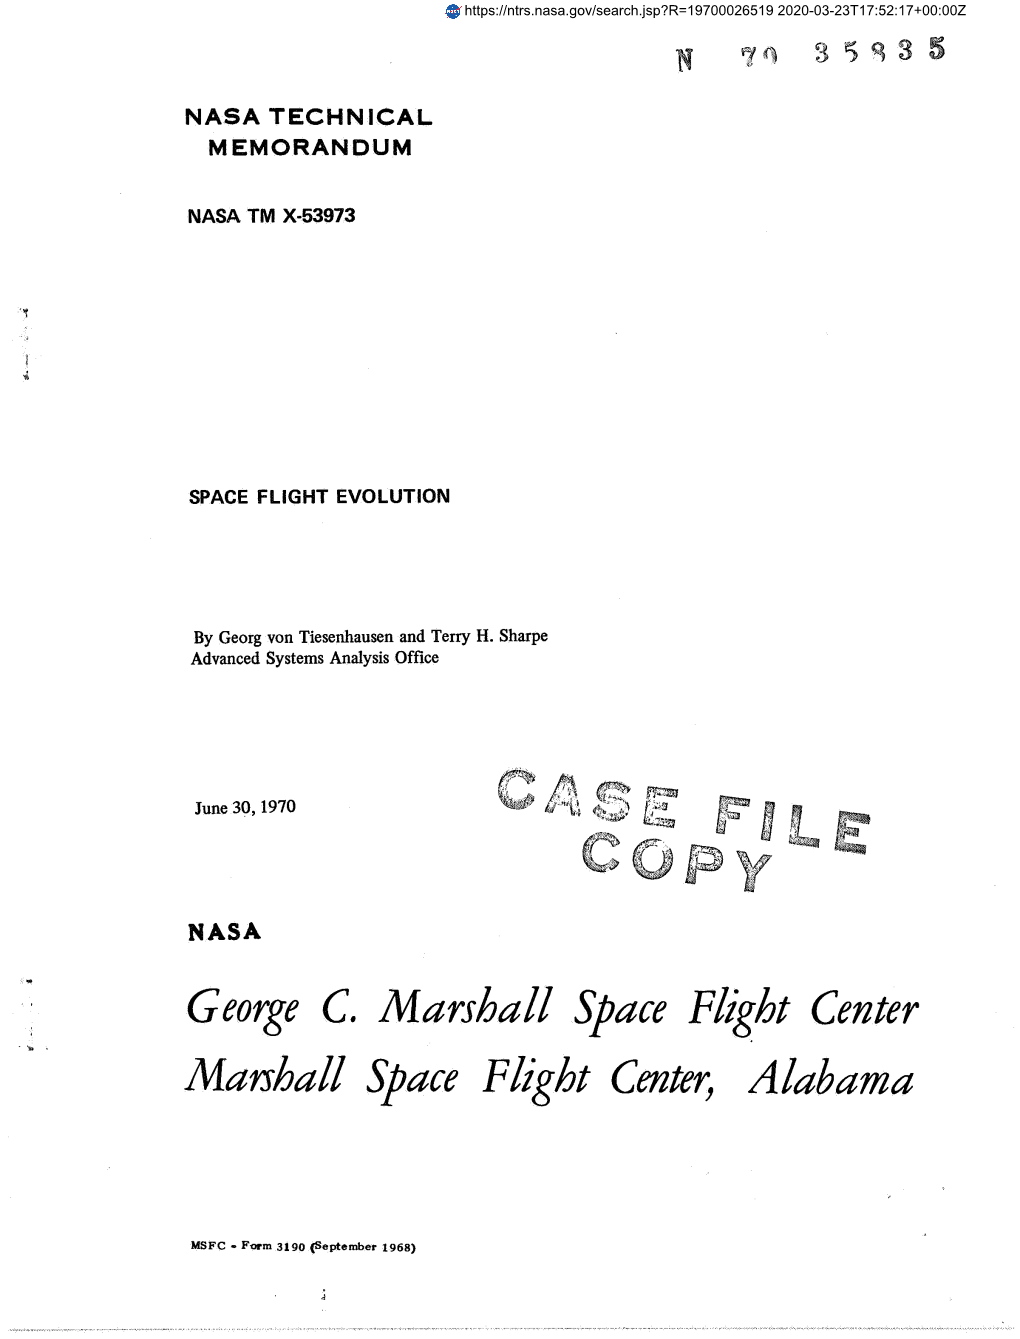 George C. Marshall Space Flight Center Malshall Space Flight Center, Alabama